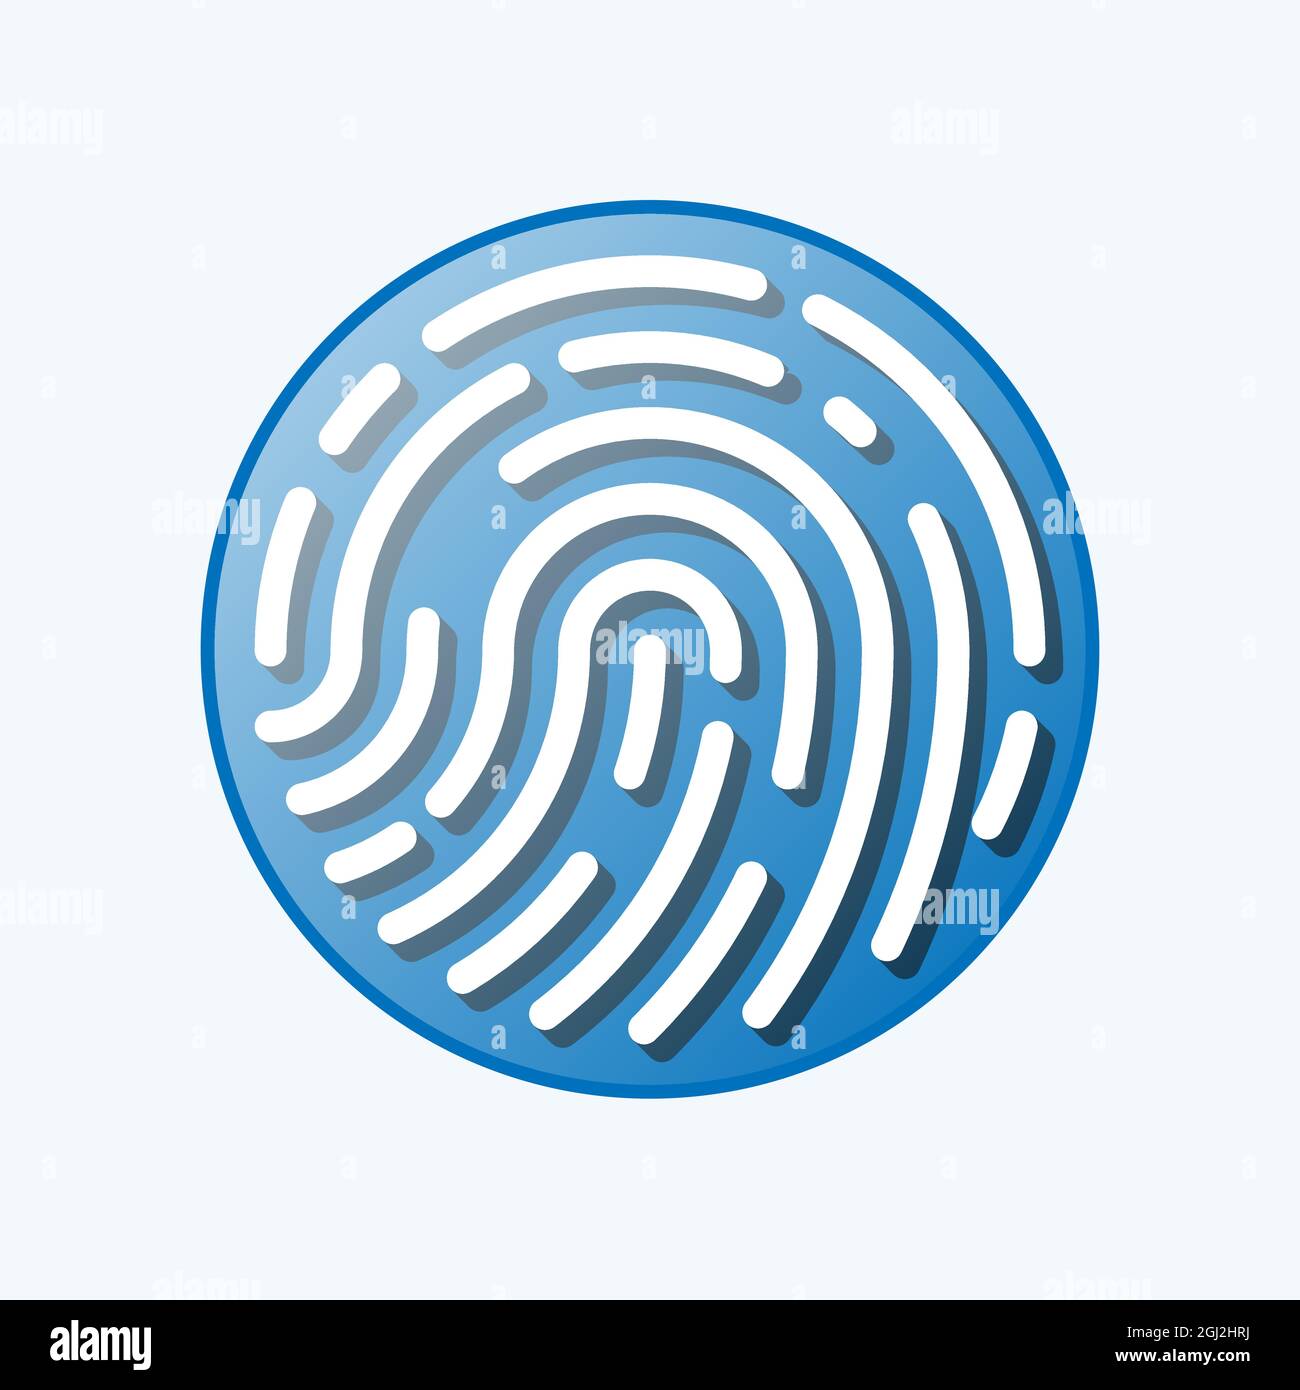 round fingerprint or thumbprint symbol isolated on white background, vector illustration Stock Vector